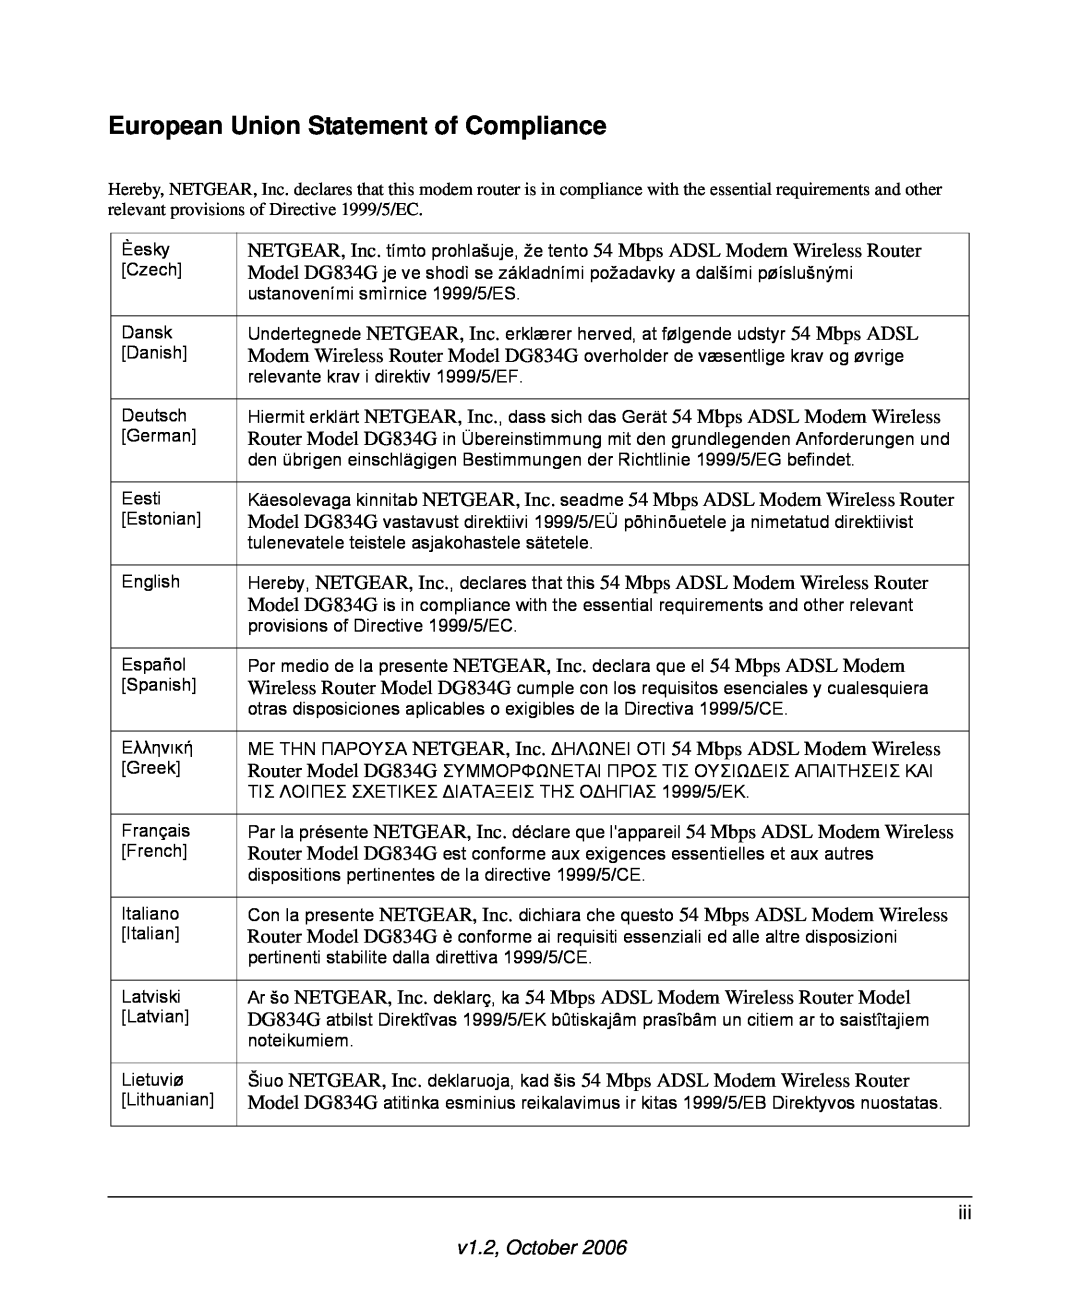 NETGEAR DG834G manual European Union Statement of Compliance, v1.2, October 